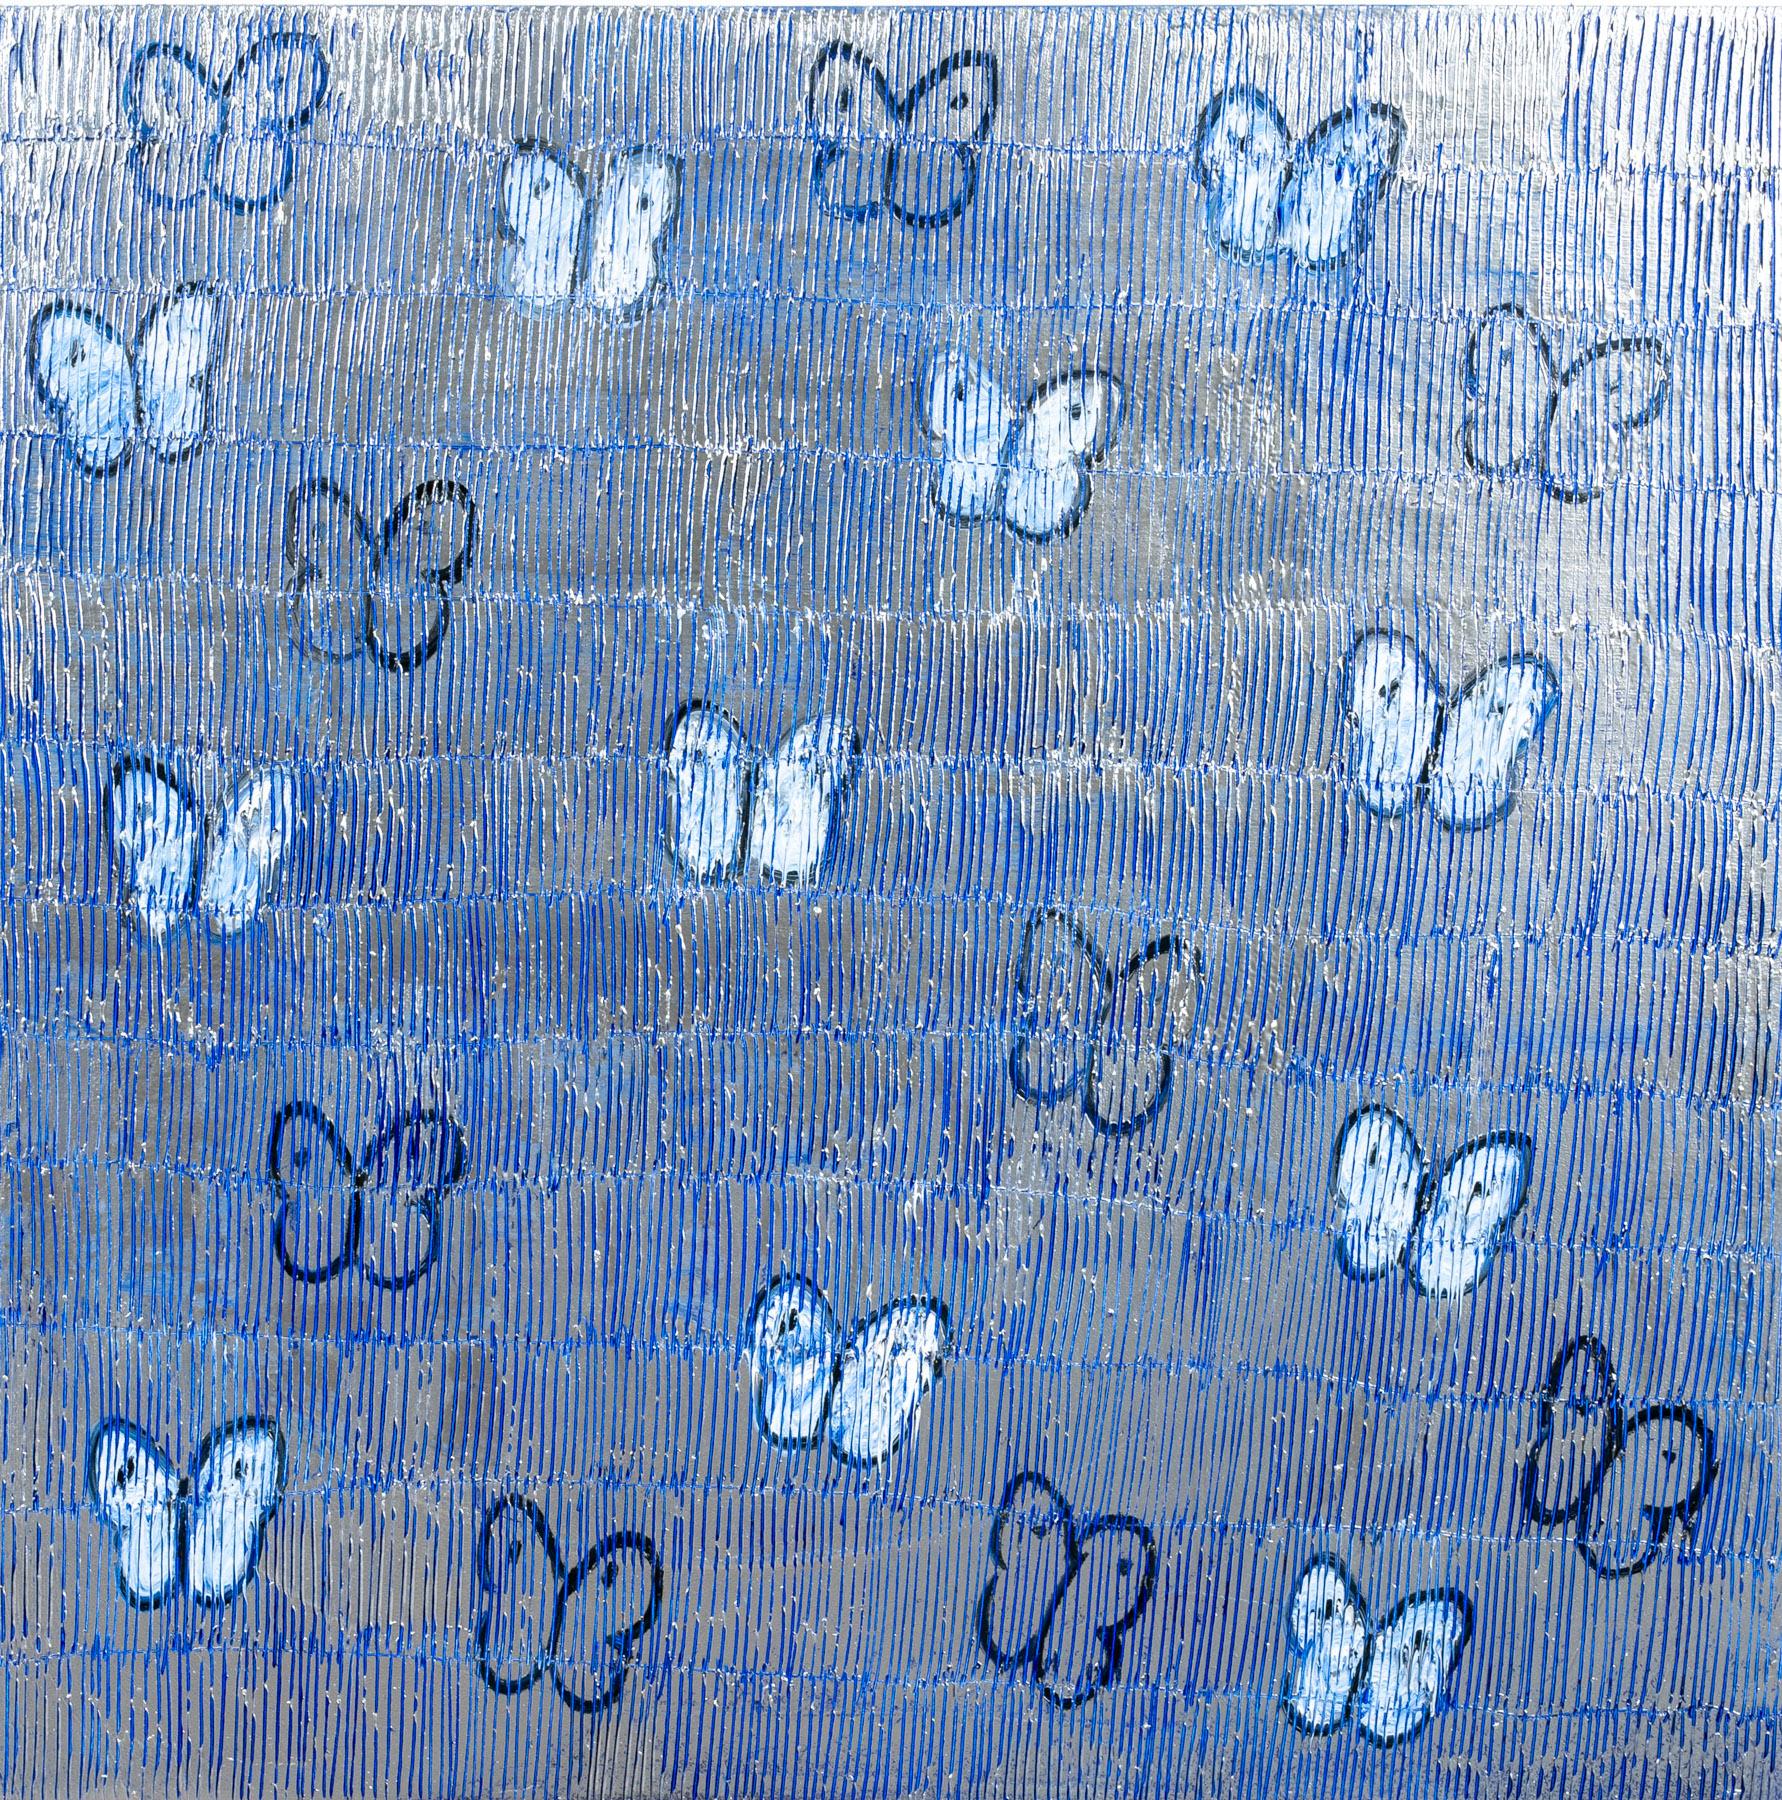 Blue Ascension Memory - Painting by Hunt Slonem